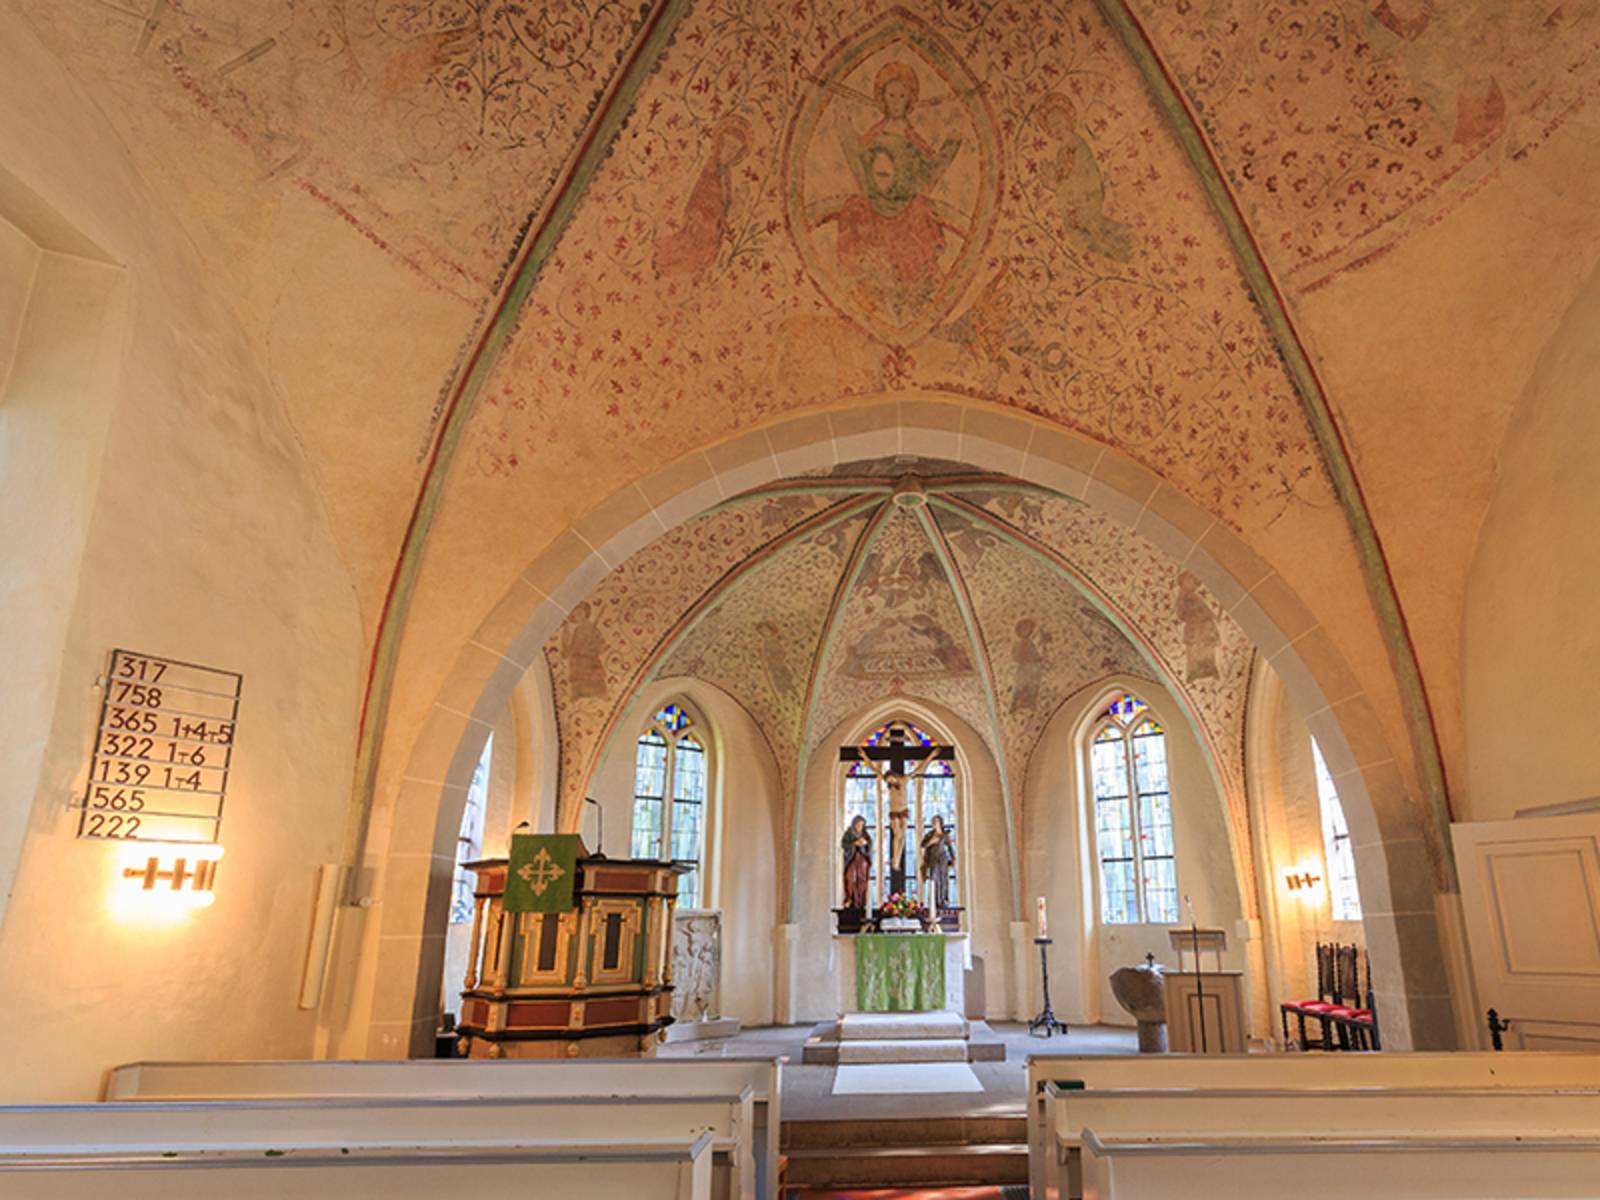  Das Innere der St. Petri Kirche in Burgwedel ist abgebildet.